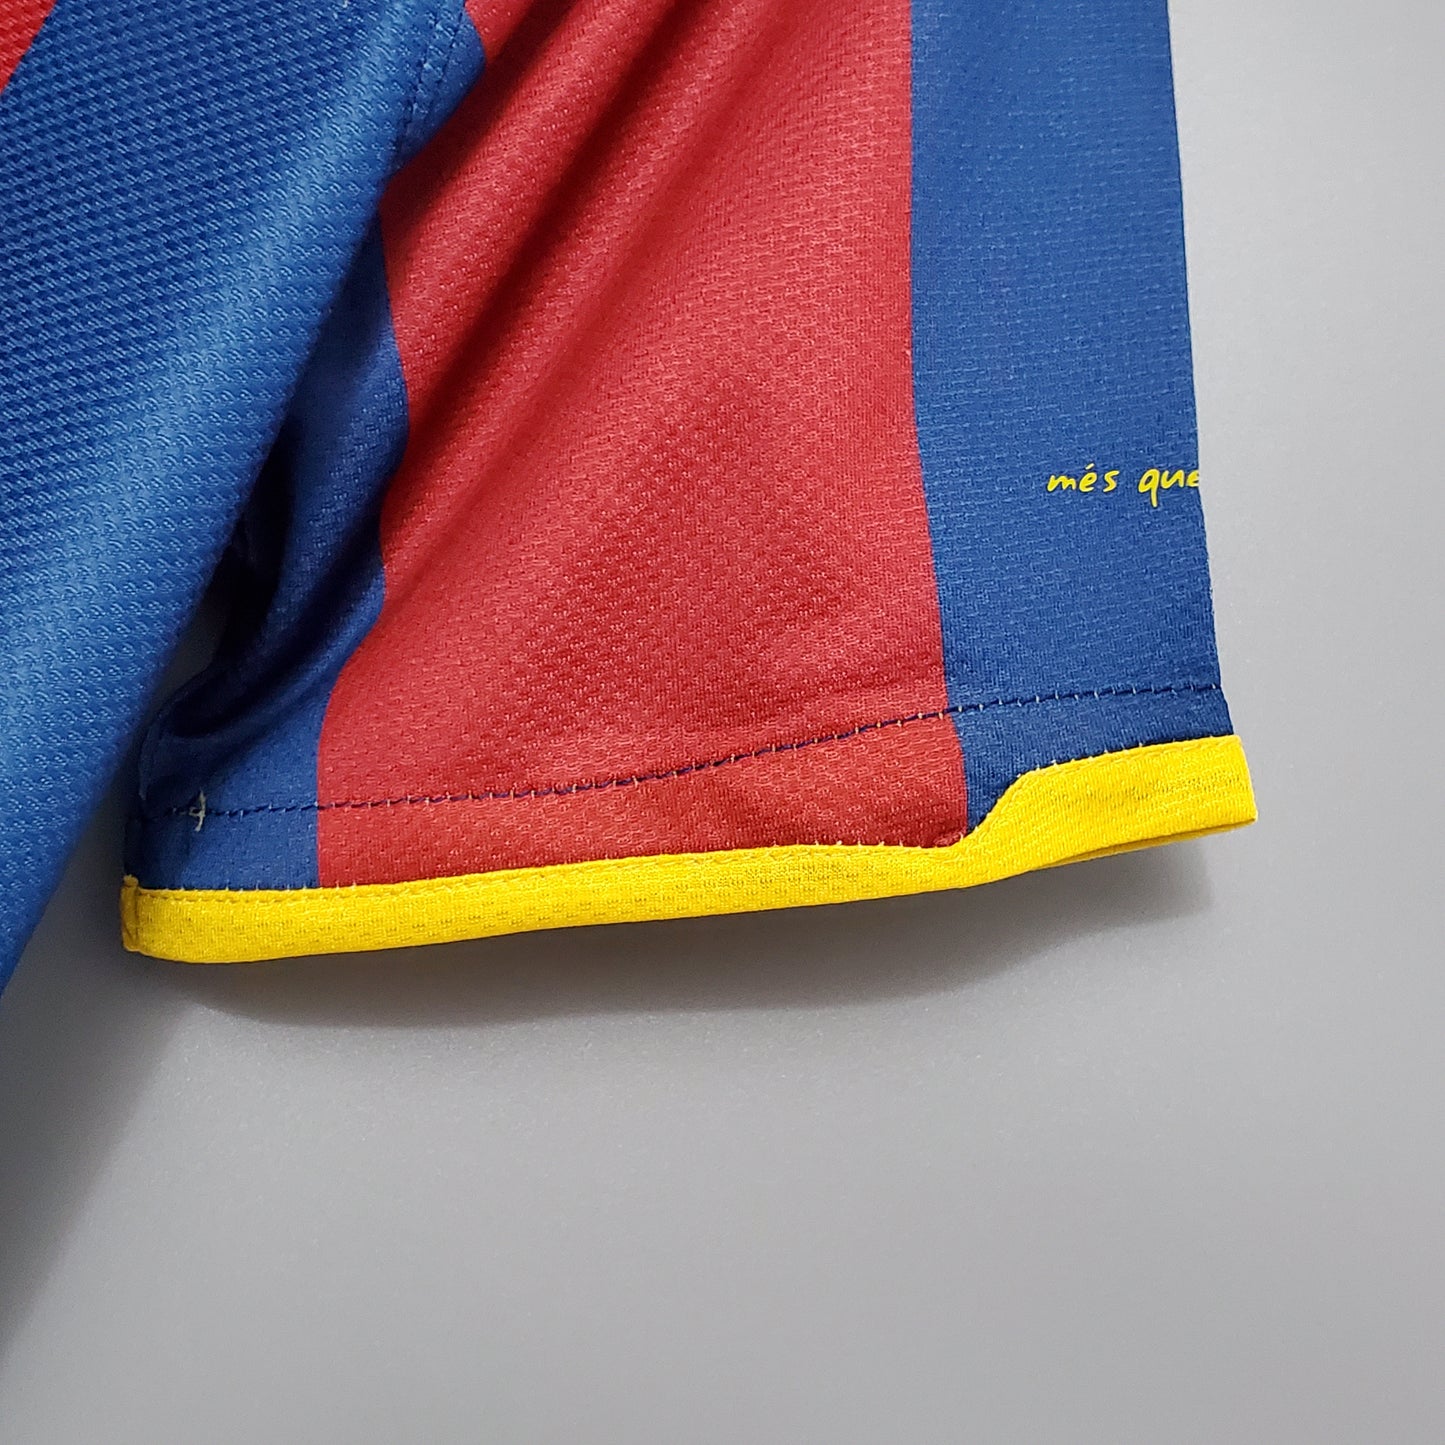 Messi-10-Barcelona-2011-football-retro-jerseys